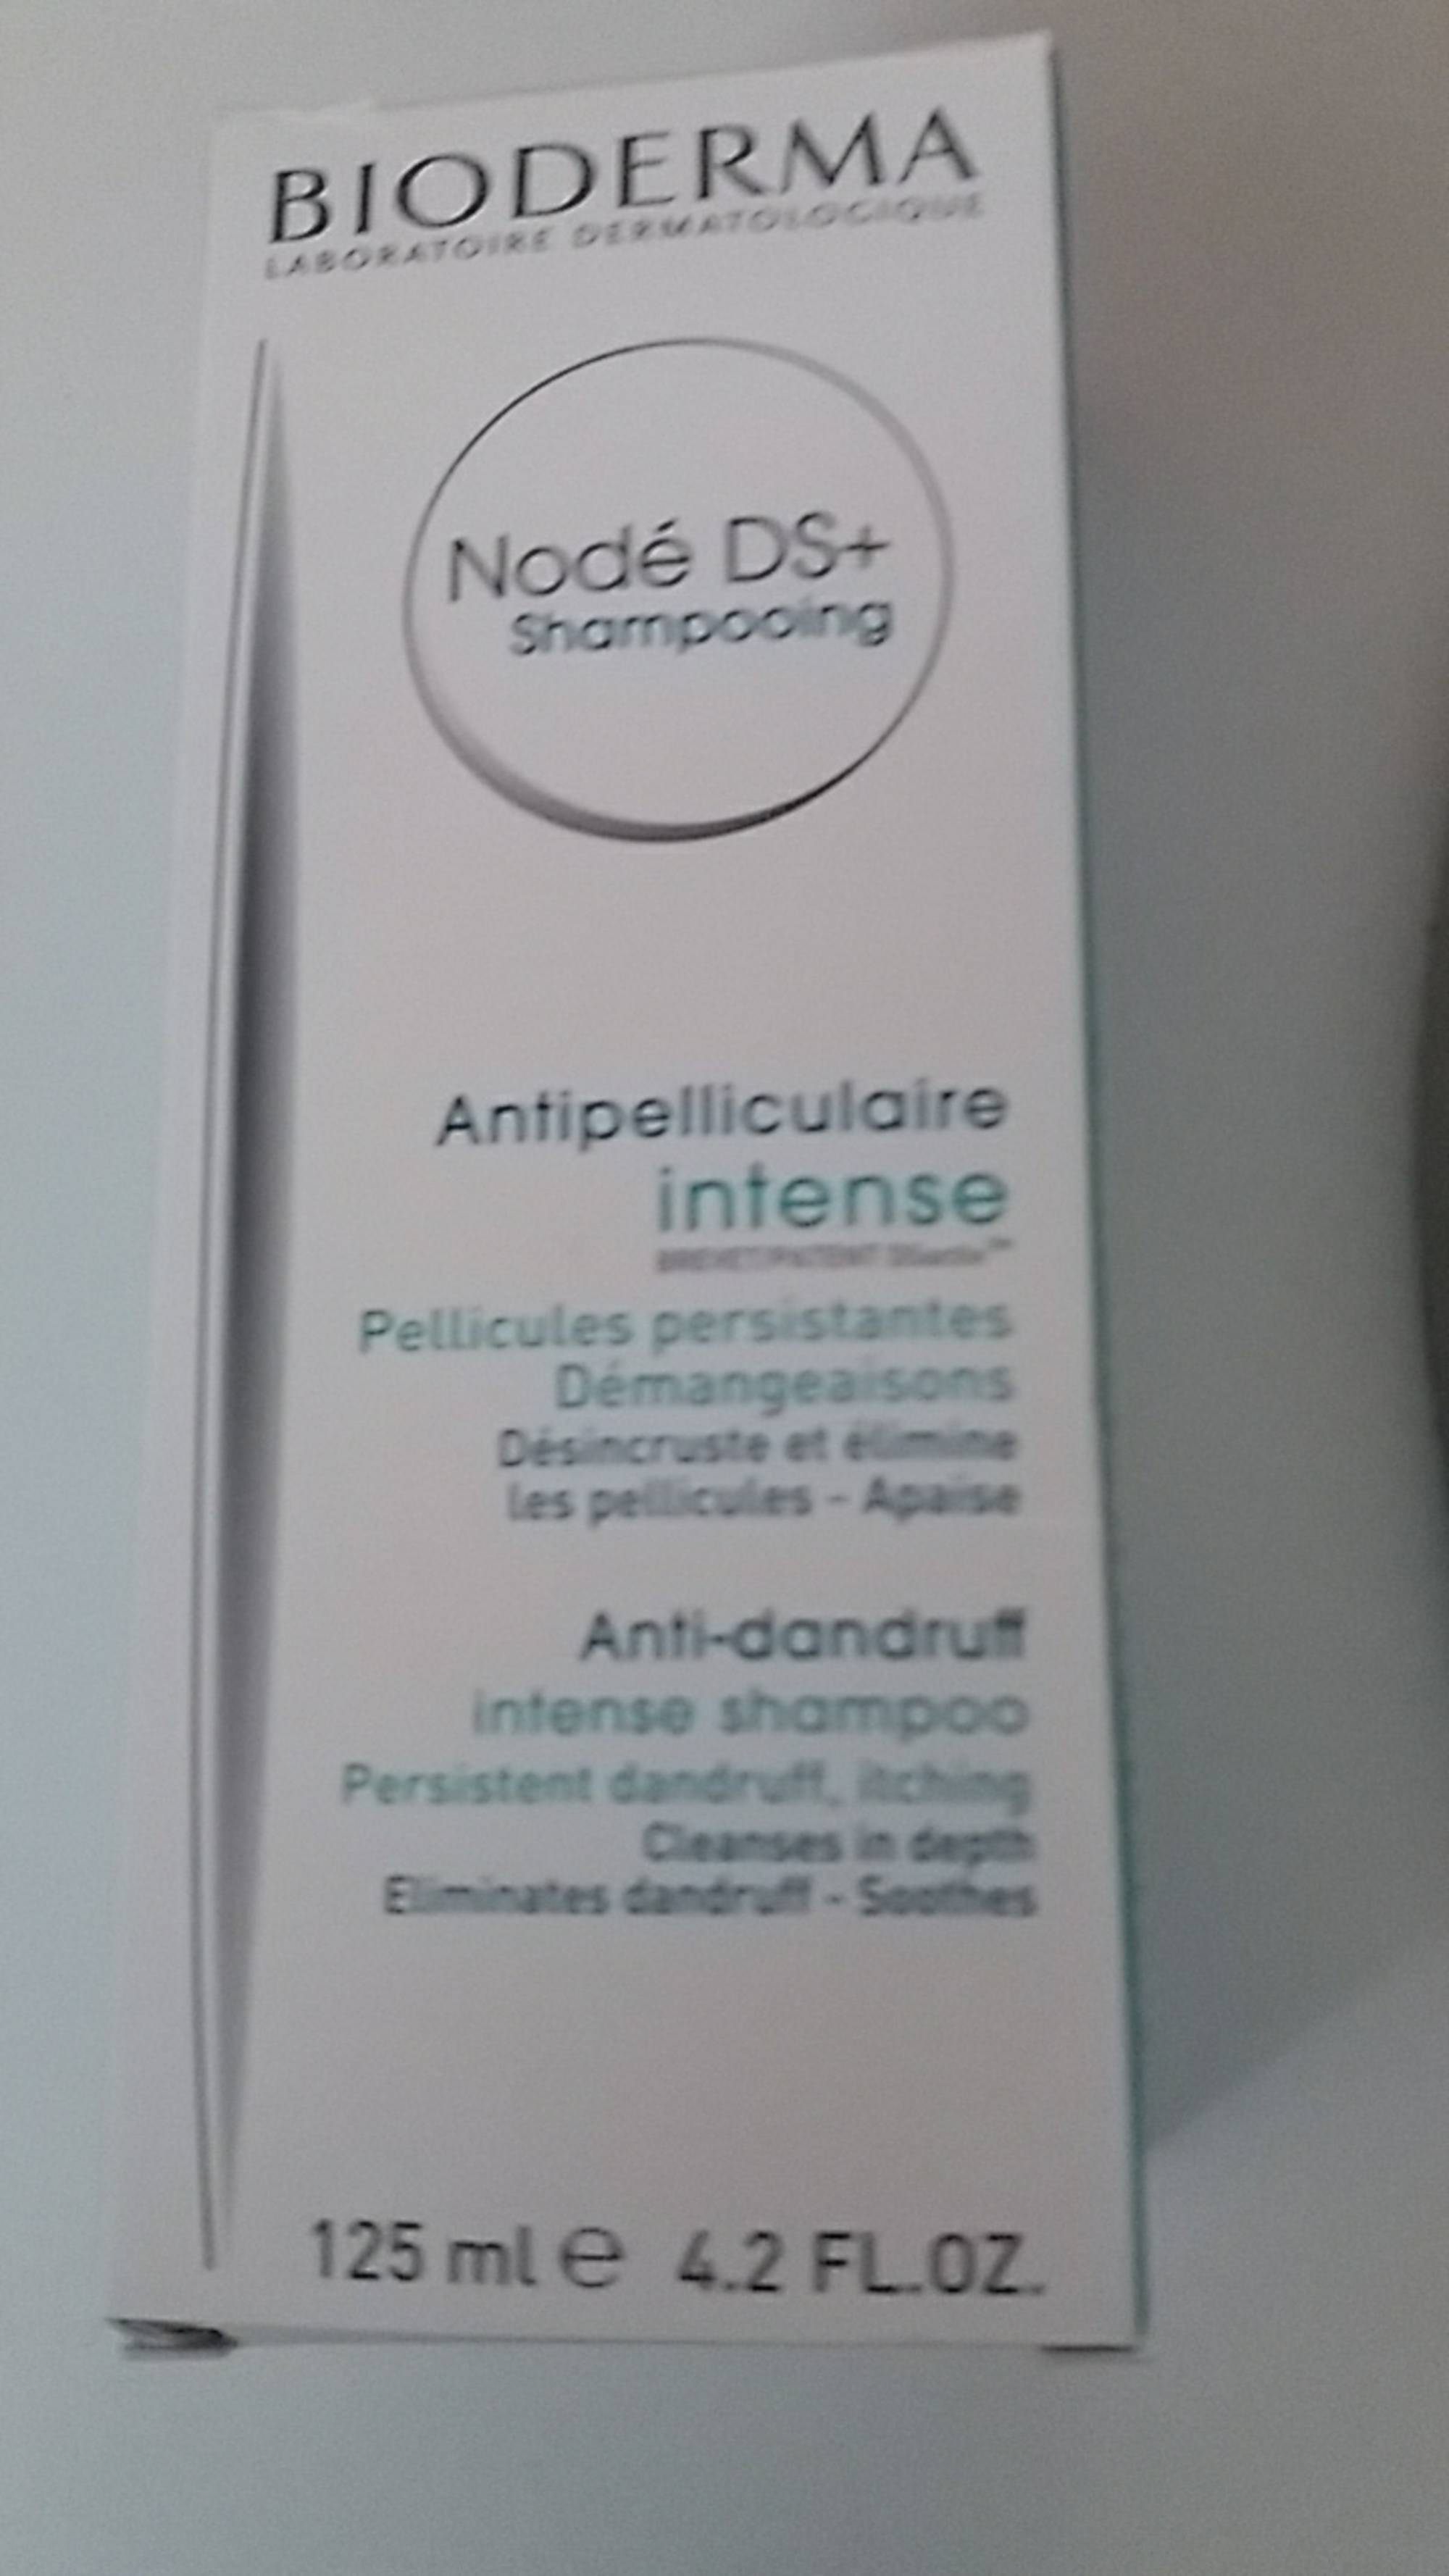 BIODERMA - Nodé DS+ shampooing antipelliculaire intense